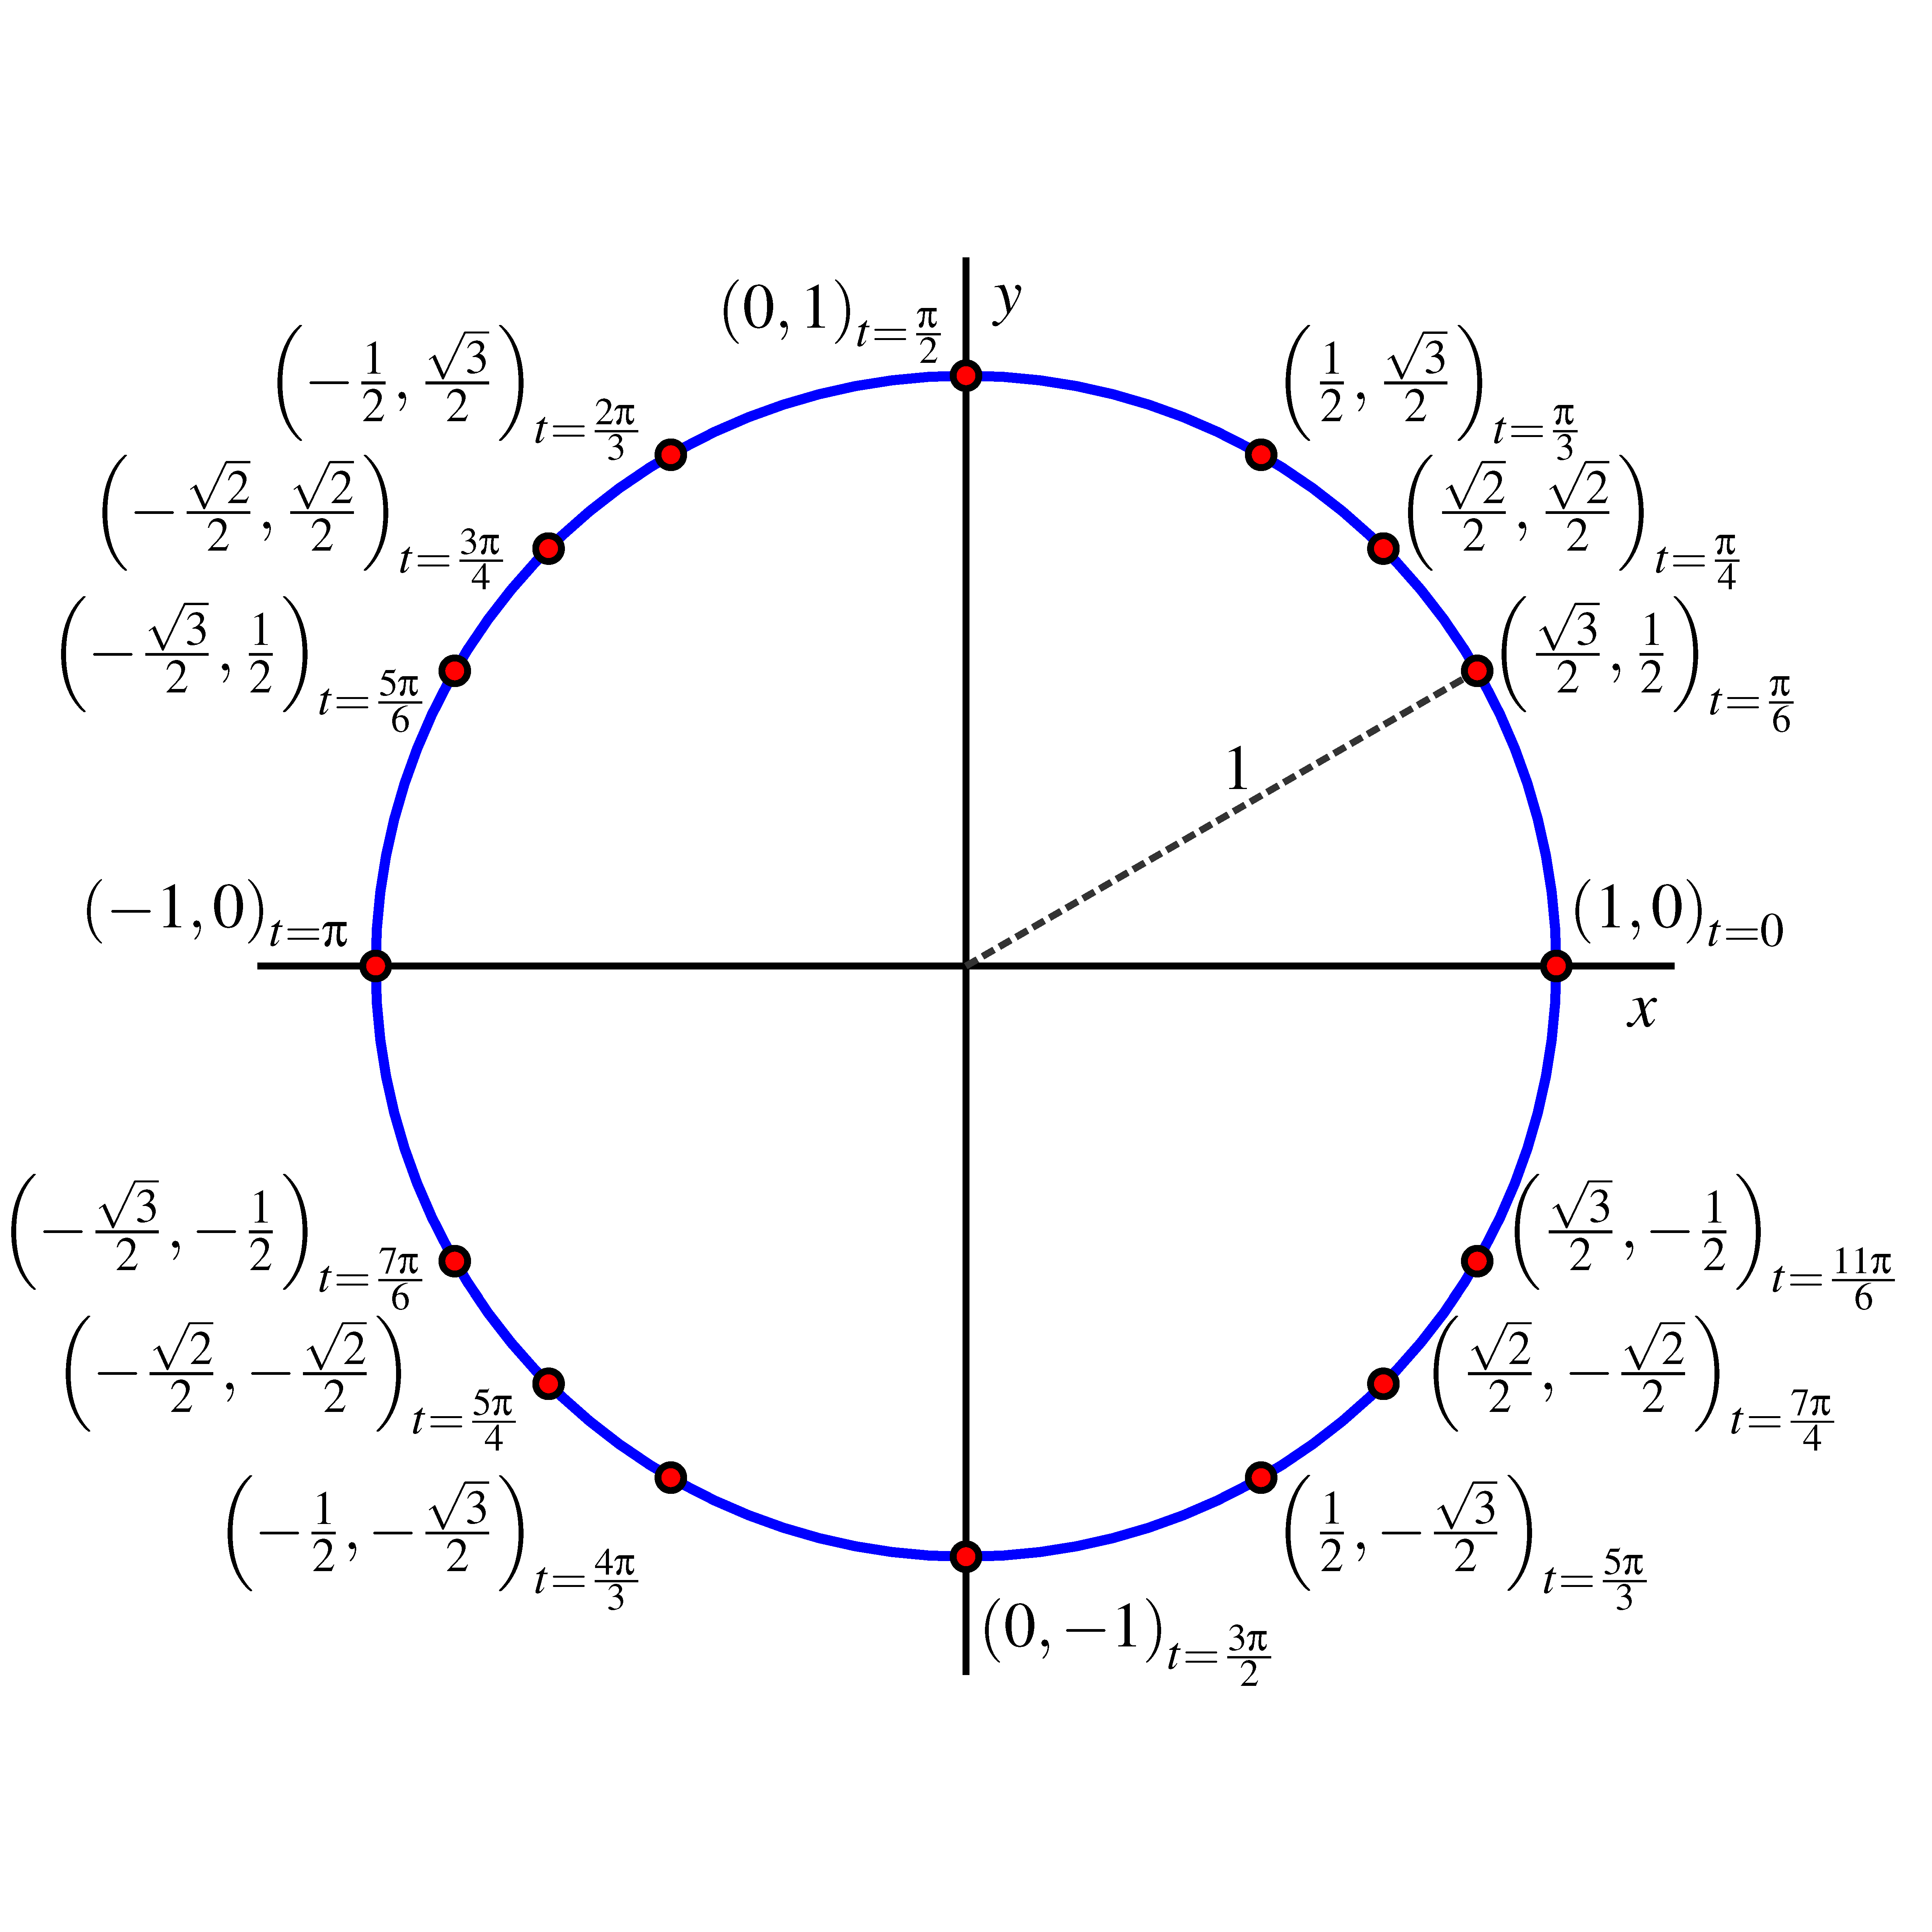 arccos unit circle